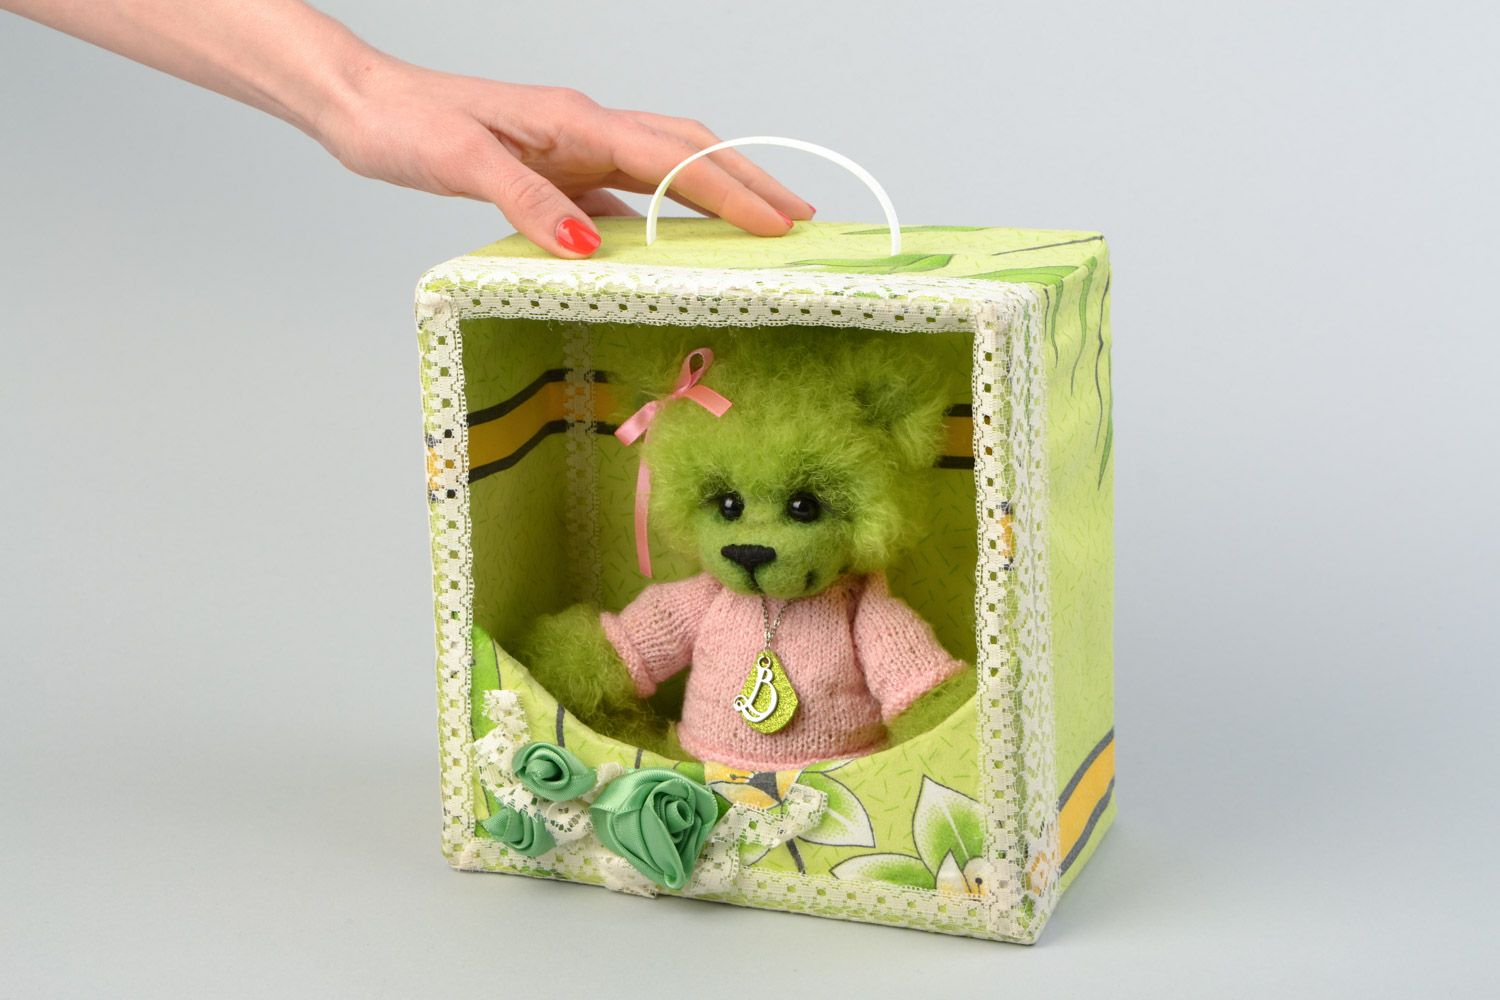 Juguete de peluche tejido a ganchillo para coleccionar en caja osita verde clara artesanal foto 2